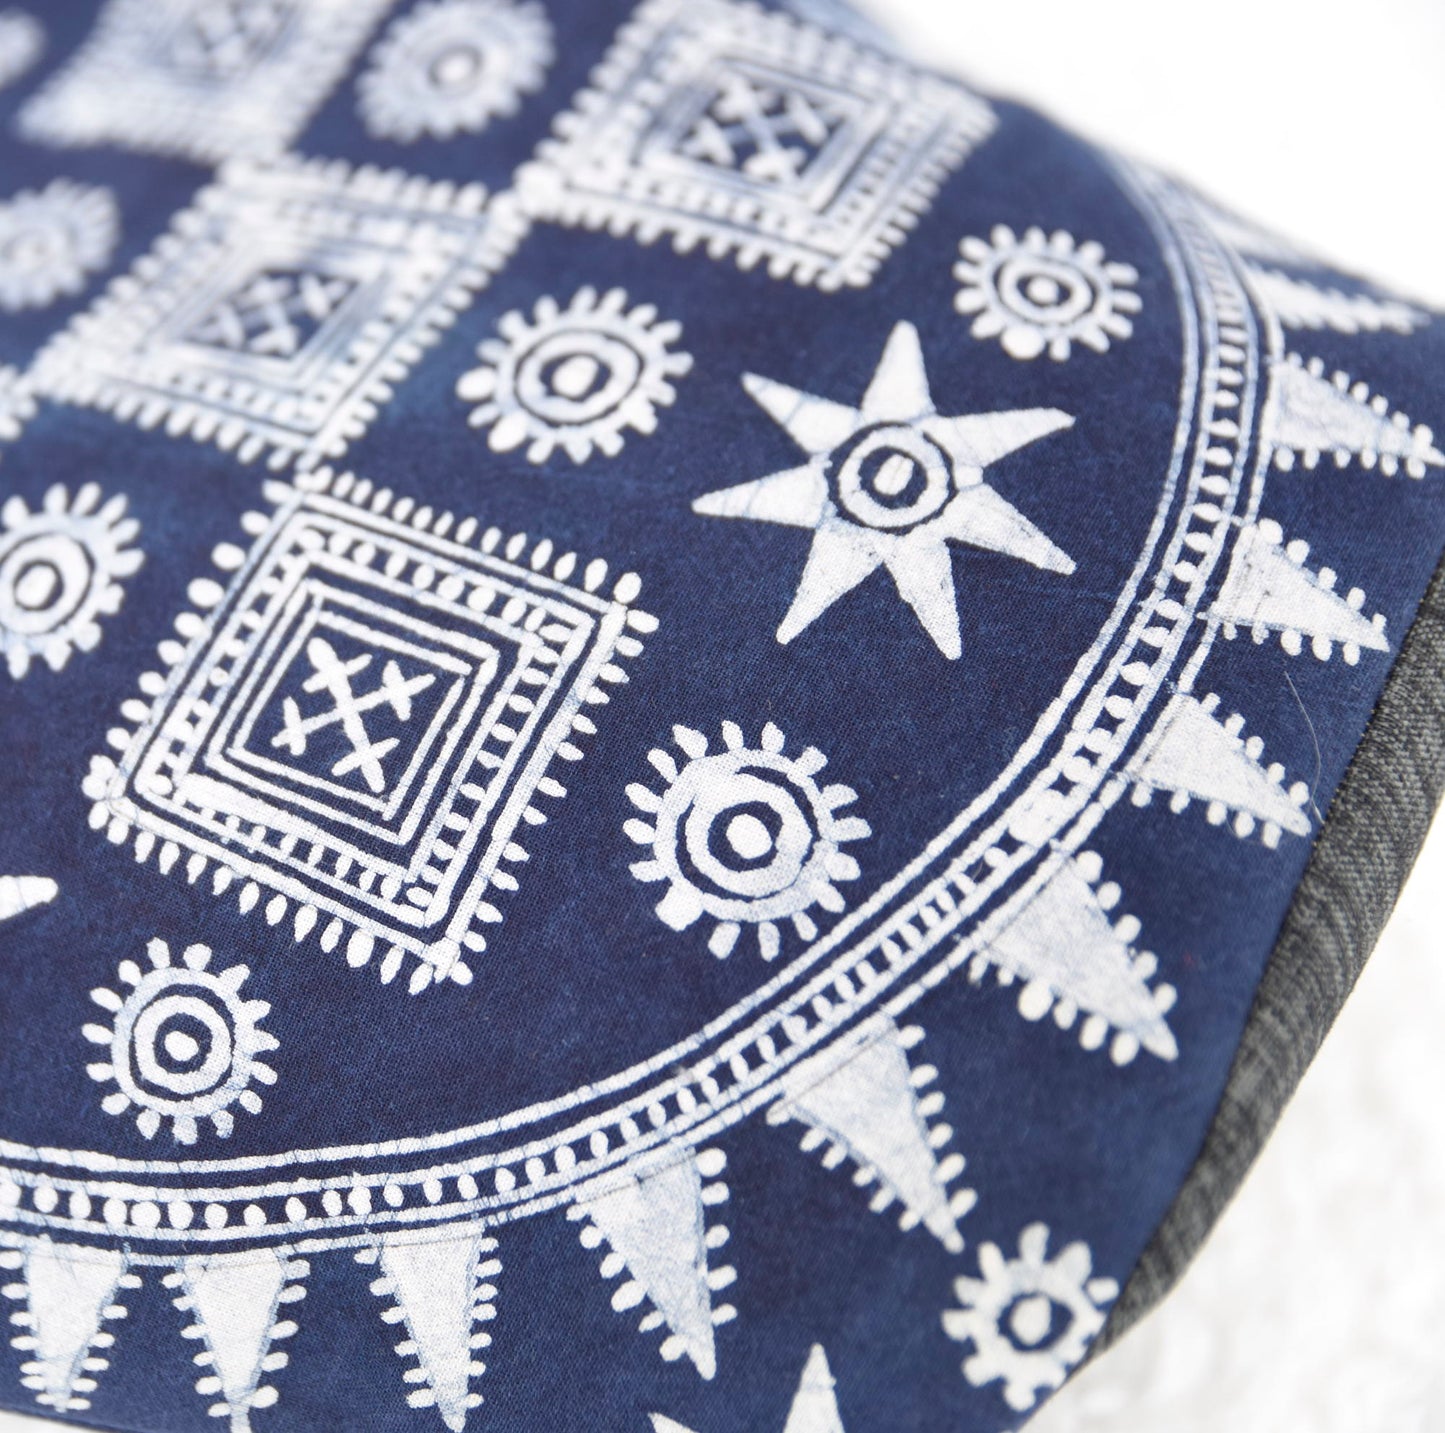 Bucket tote bag, grey handles, indigo blue batik fabric fabric in H'mong pattern